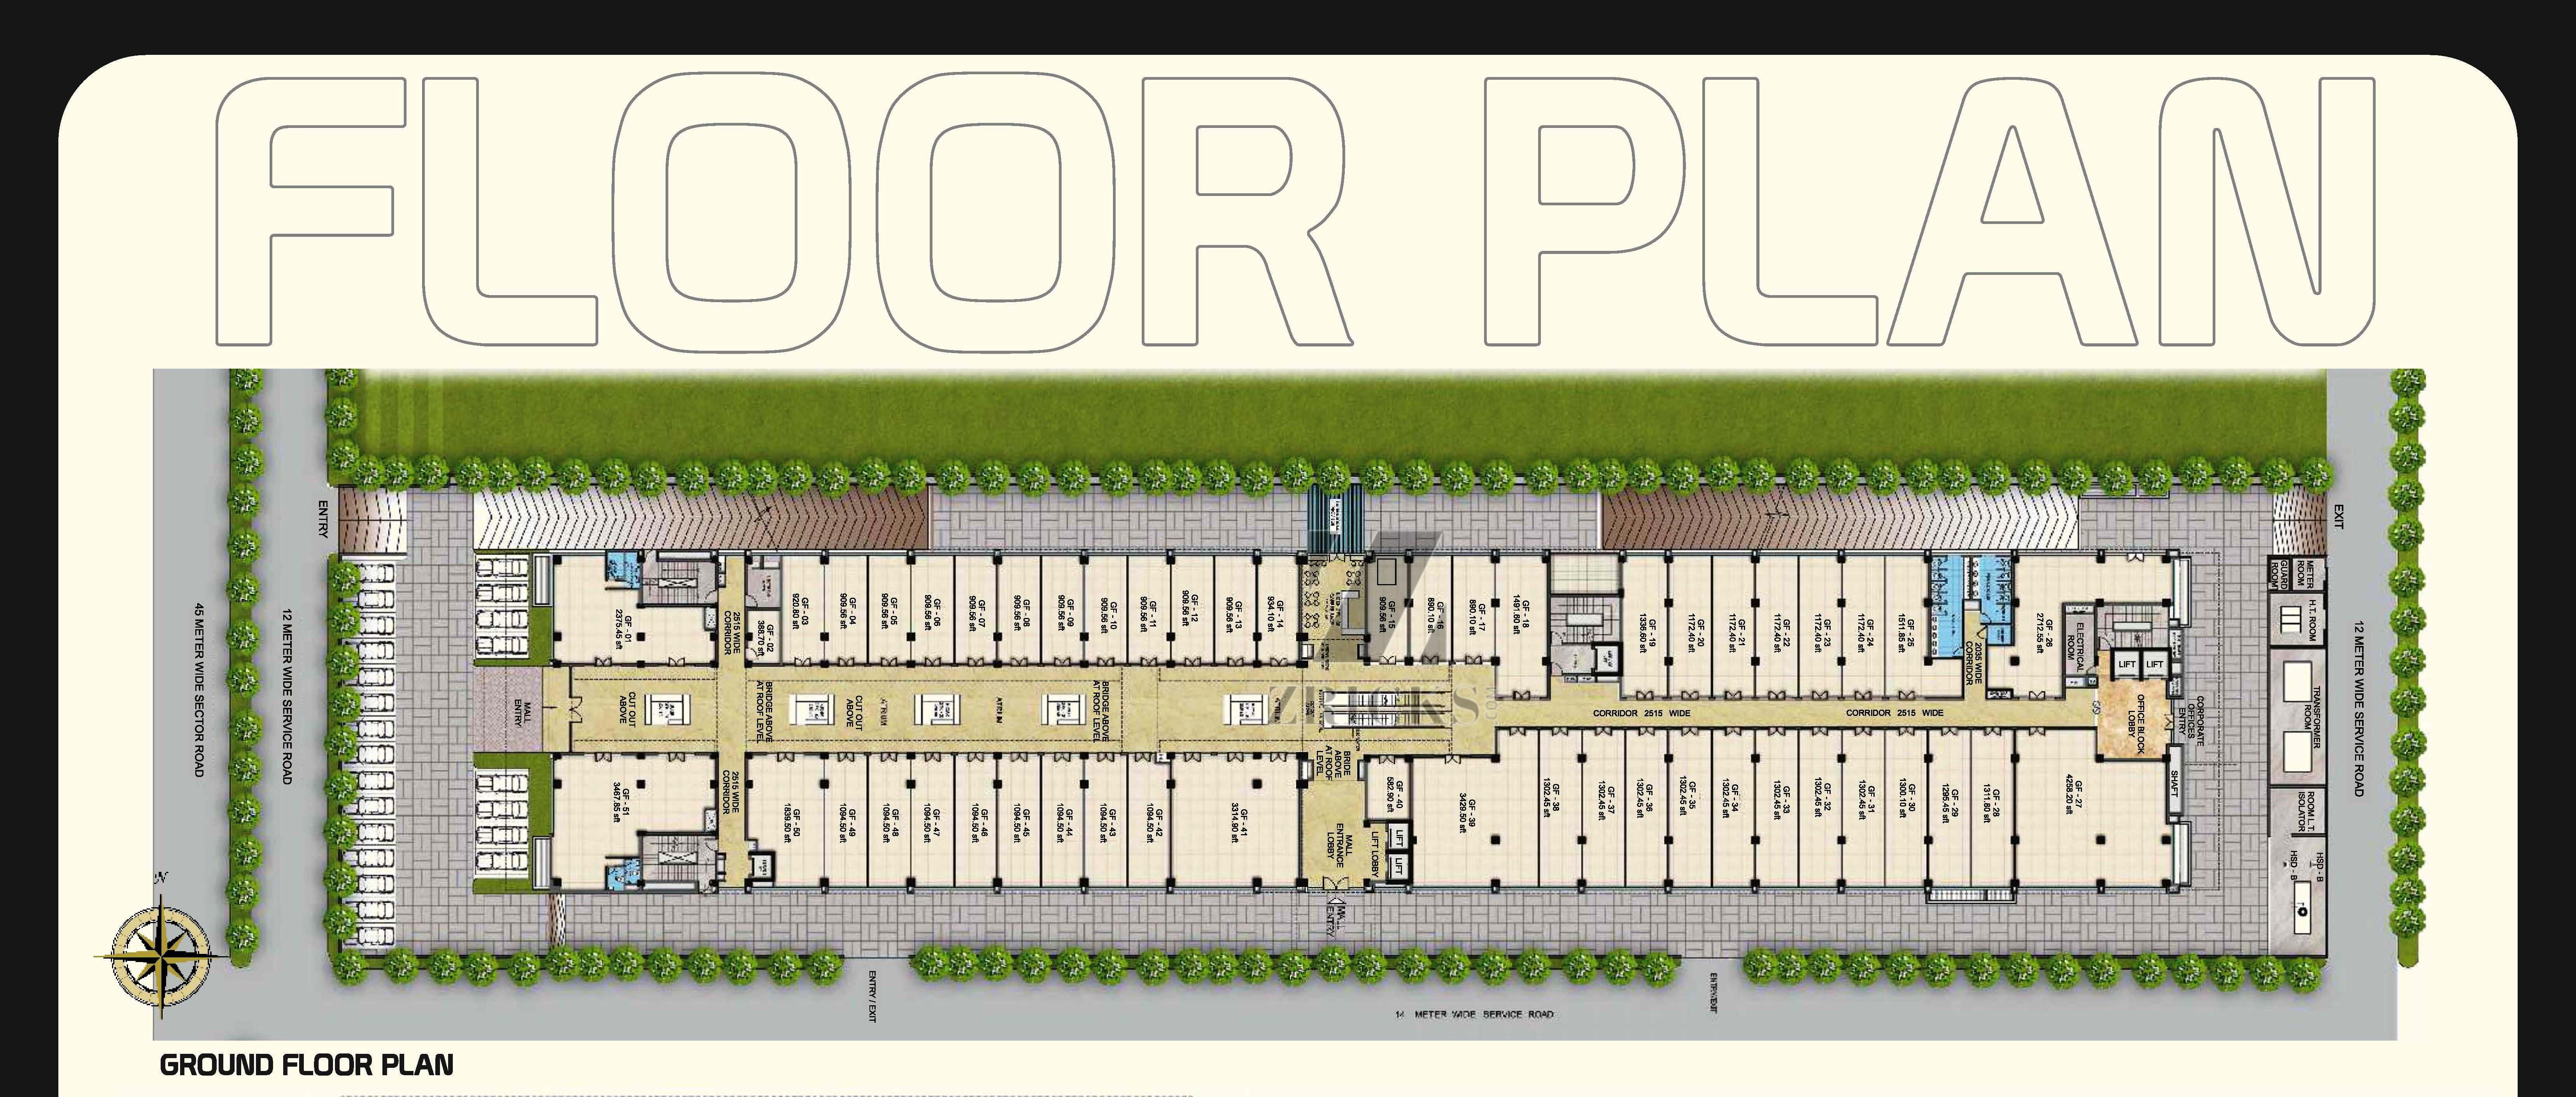 M2K Corporate Park Shopping Plaza Floor Plan